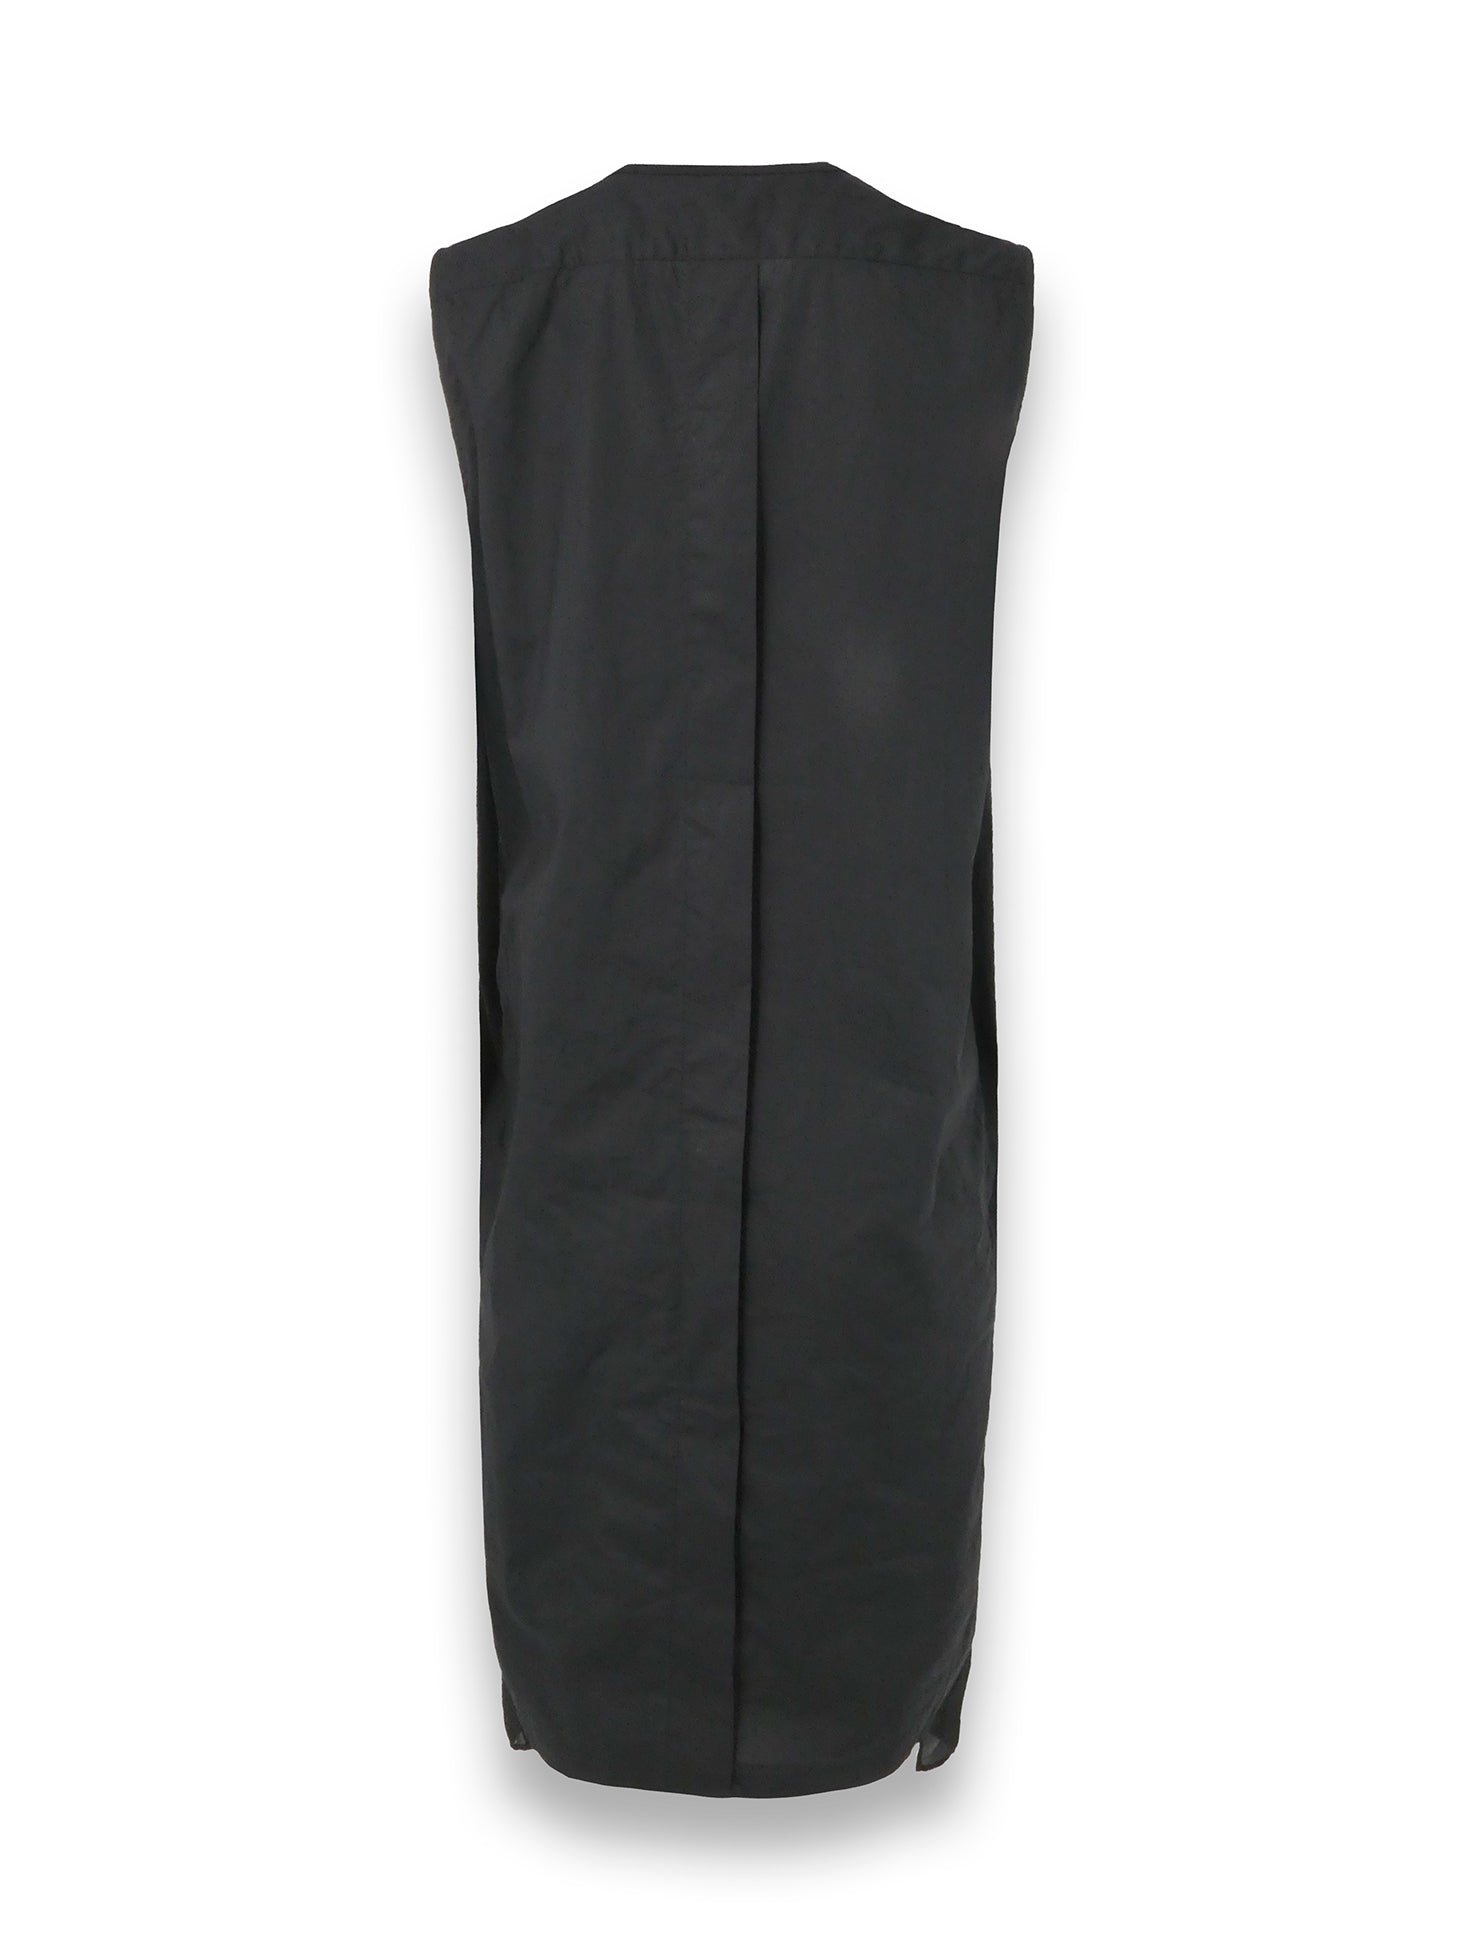 Black Sleeveless Dress with Silk Lining